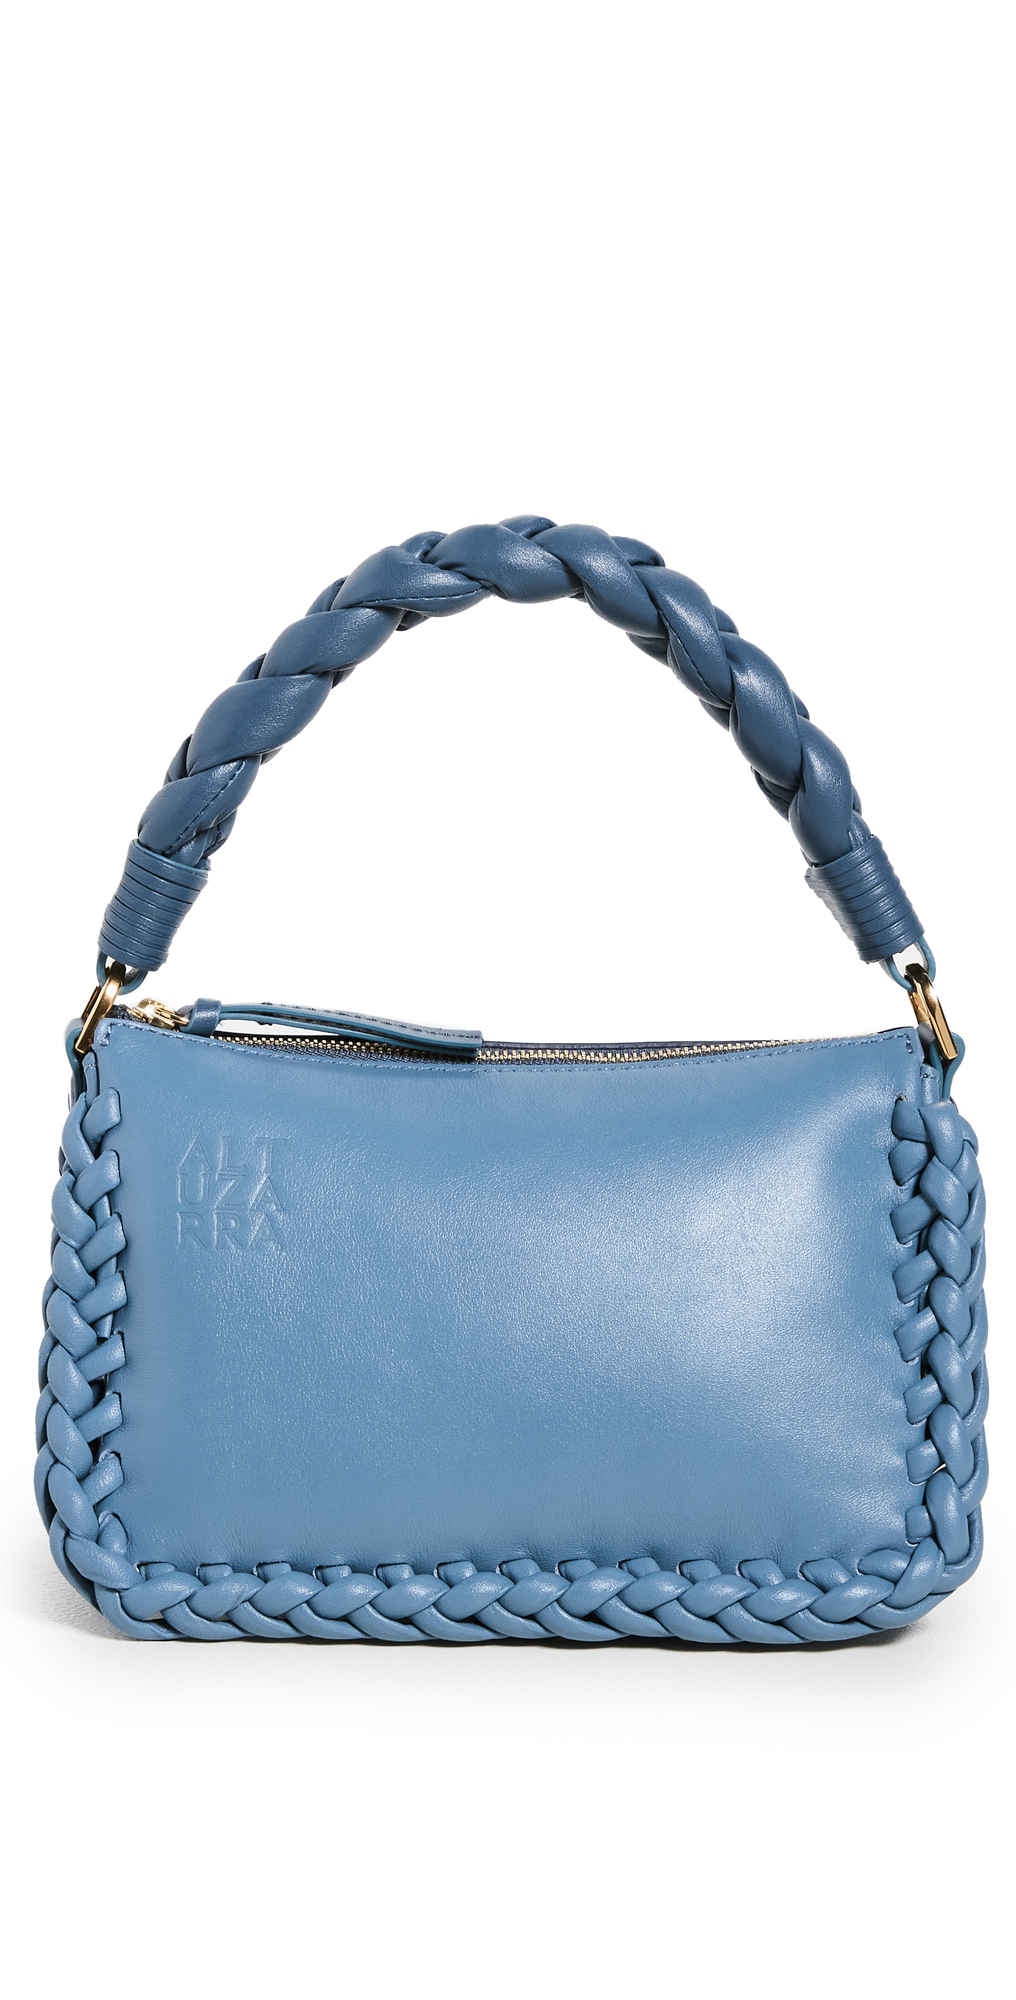 Altuzarra Small Braided Bag in blue / multi